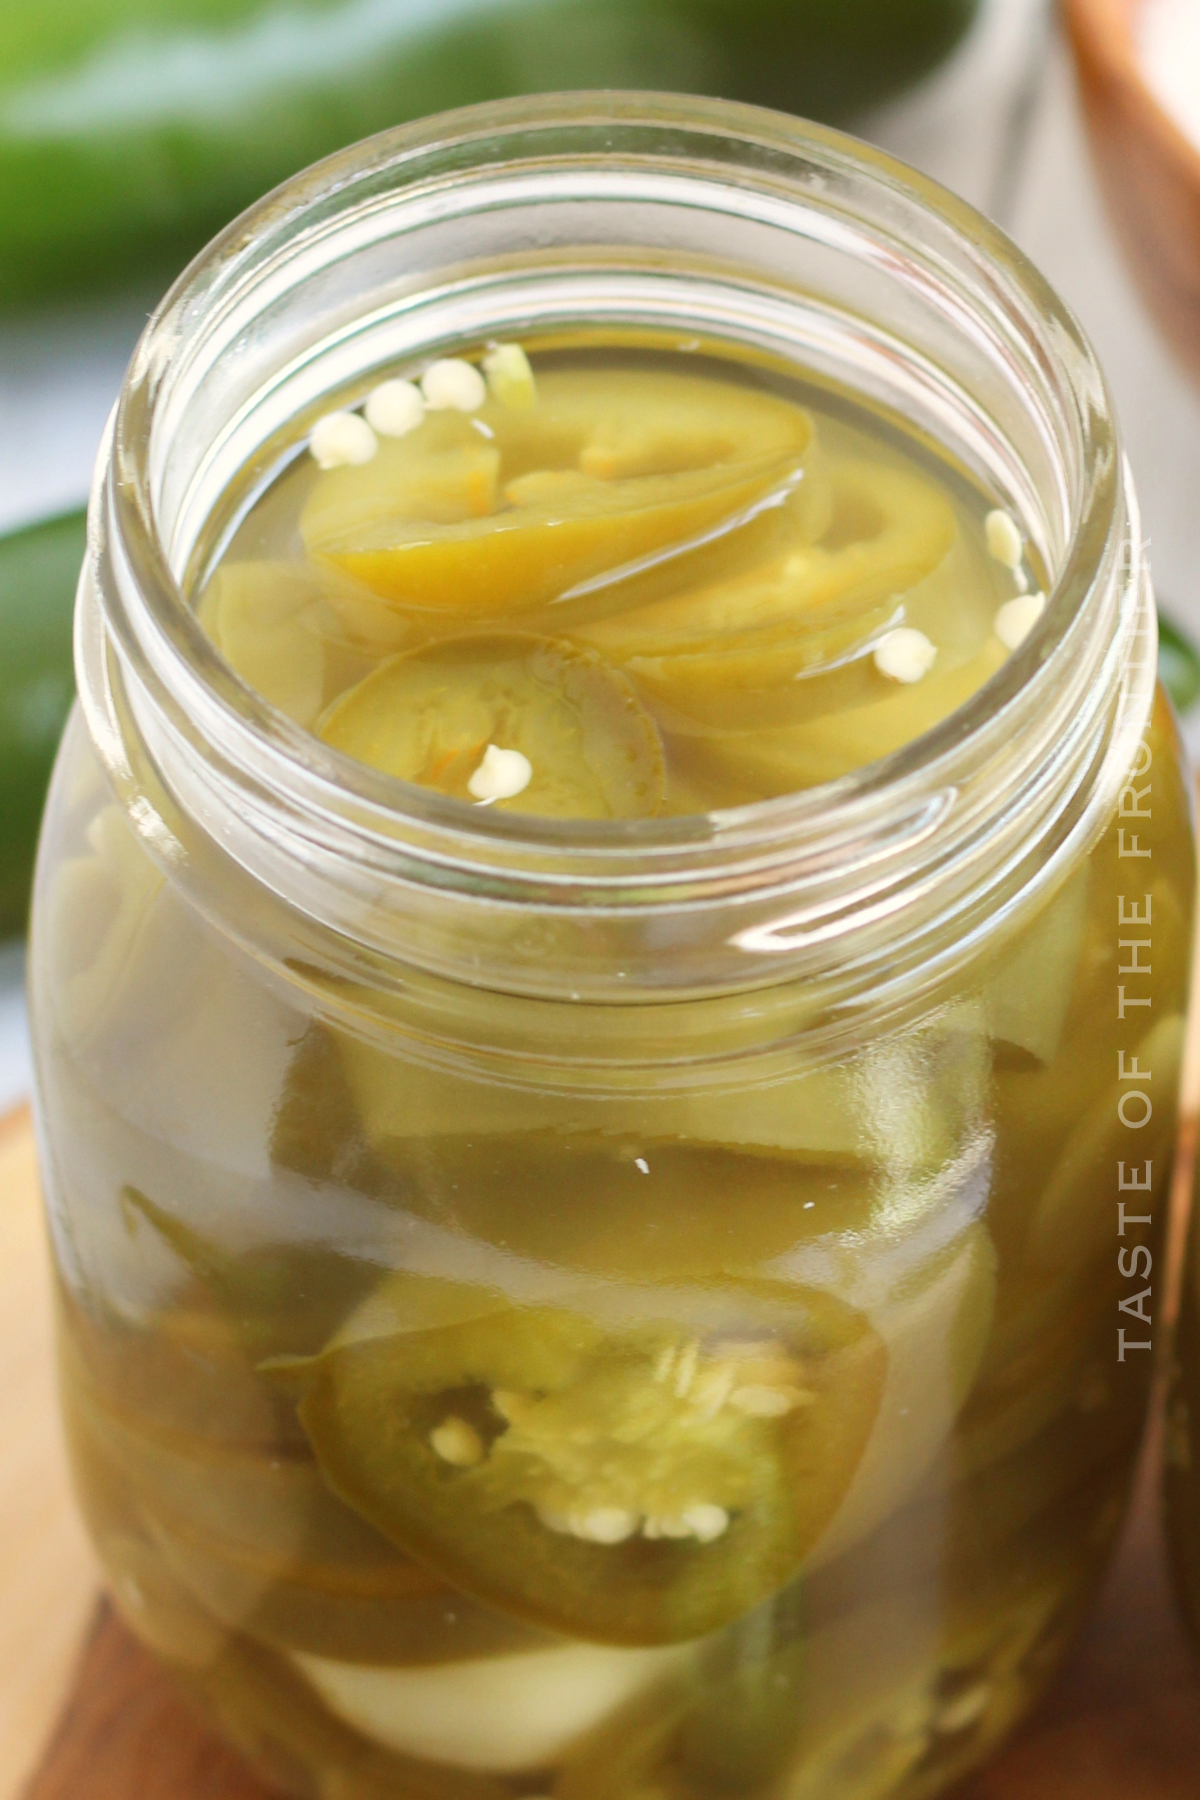 Pickled Jalapenos Recipe